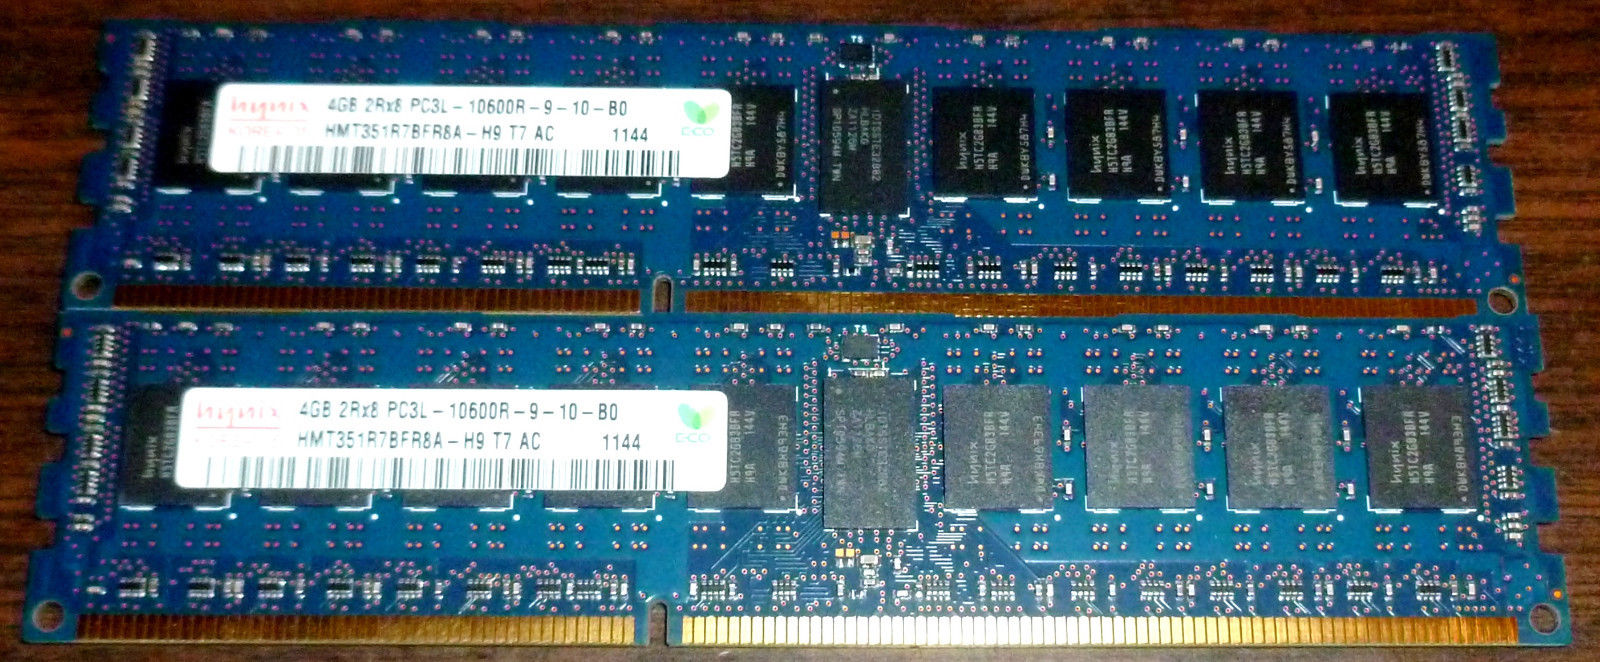 Qty 2 Hynix 4GB 2Rx8 DDR3 PC3L-10600R ECC Memory Modules HMT351R7BFR8A-H9